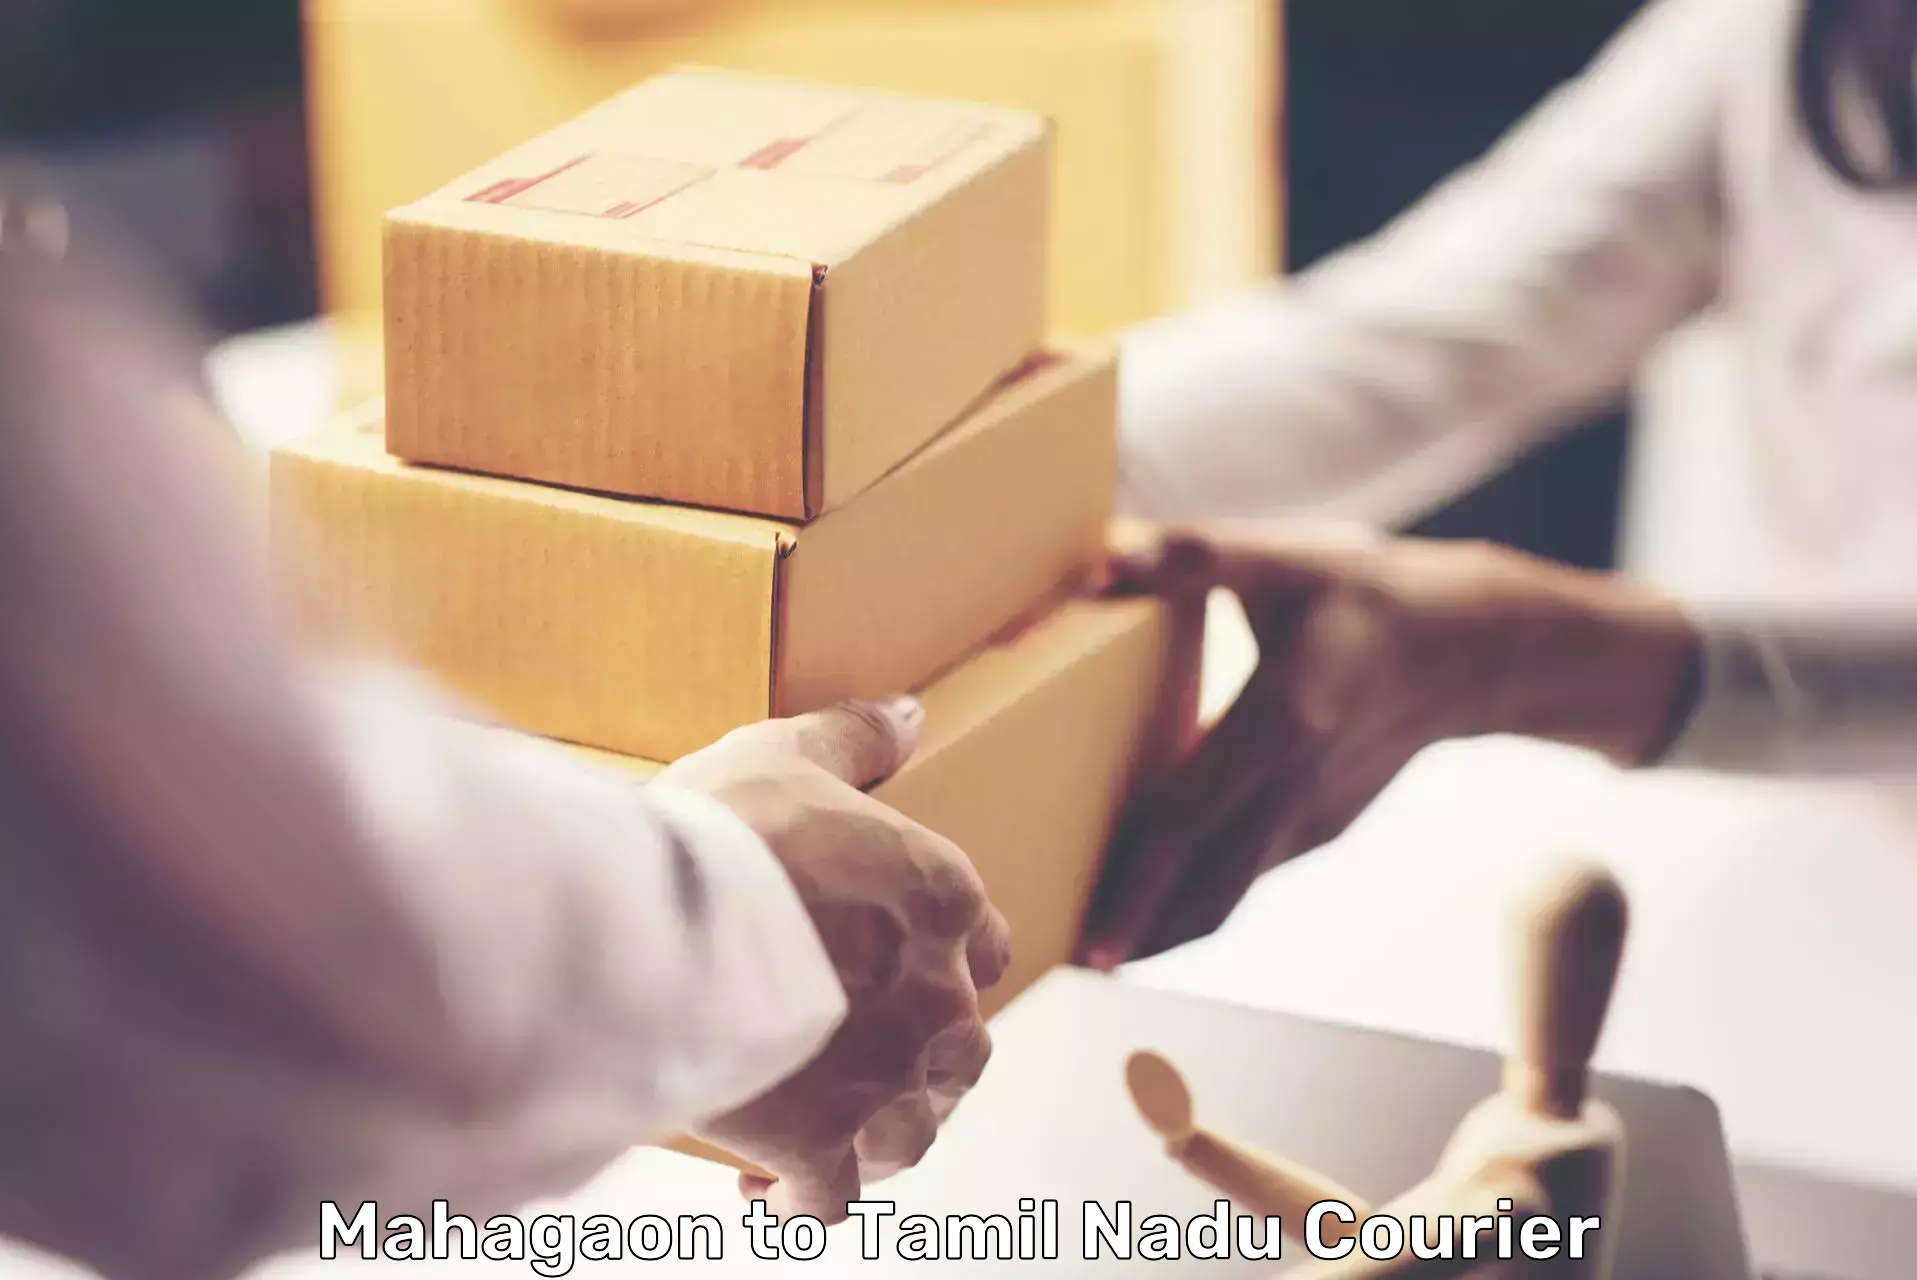 Parcel delivery automation Mahagaon to Kovilpatti